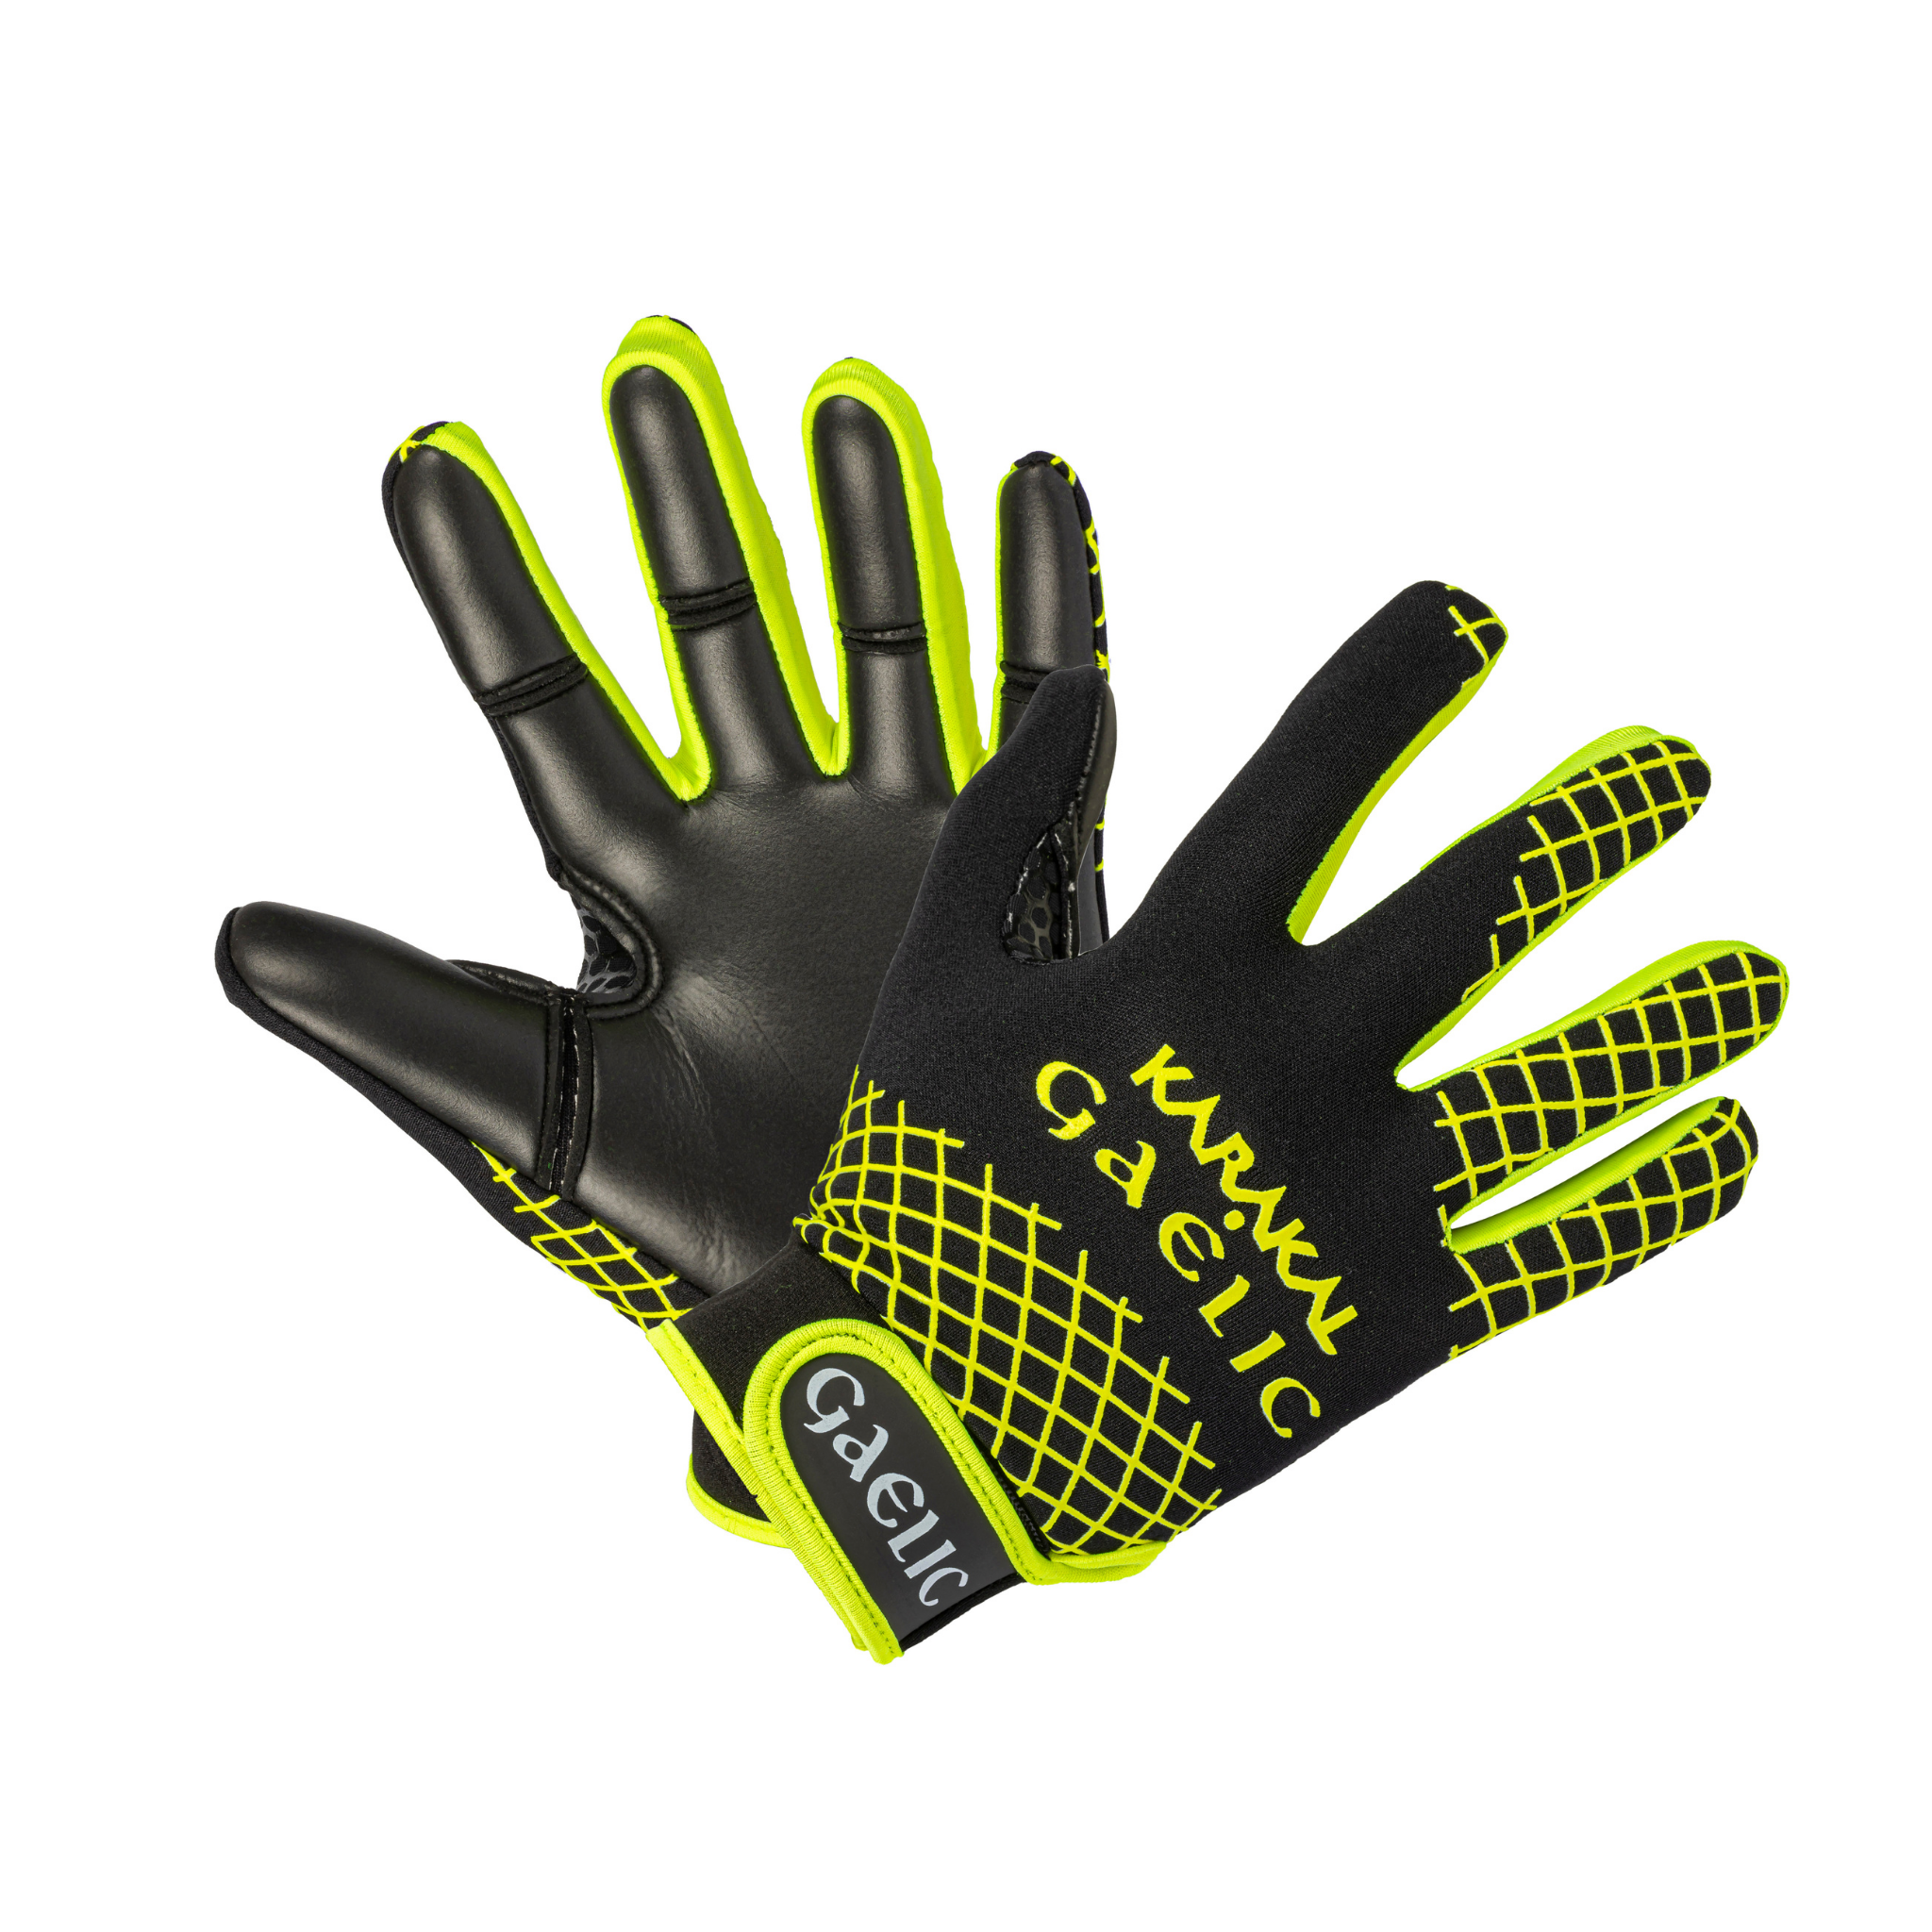 Karakal Web Gaelic Glove Black Neon Yellow